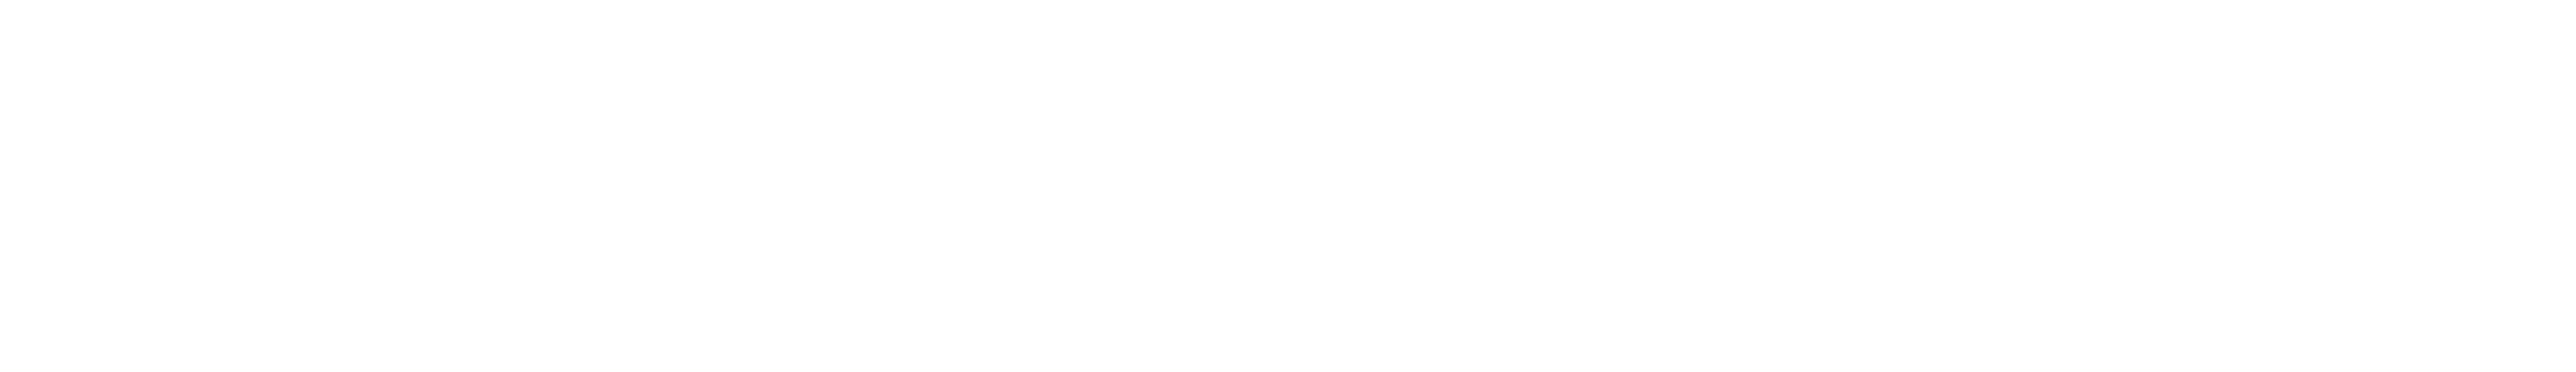 logos PRR, Republica Portuguesa, UE